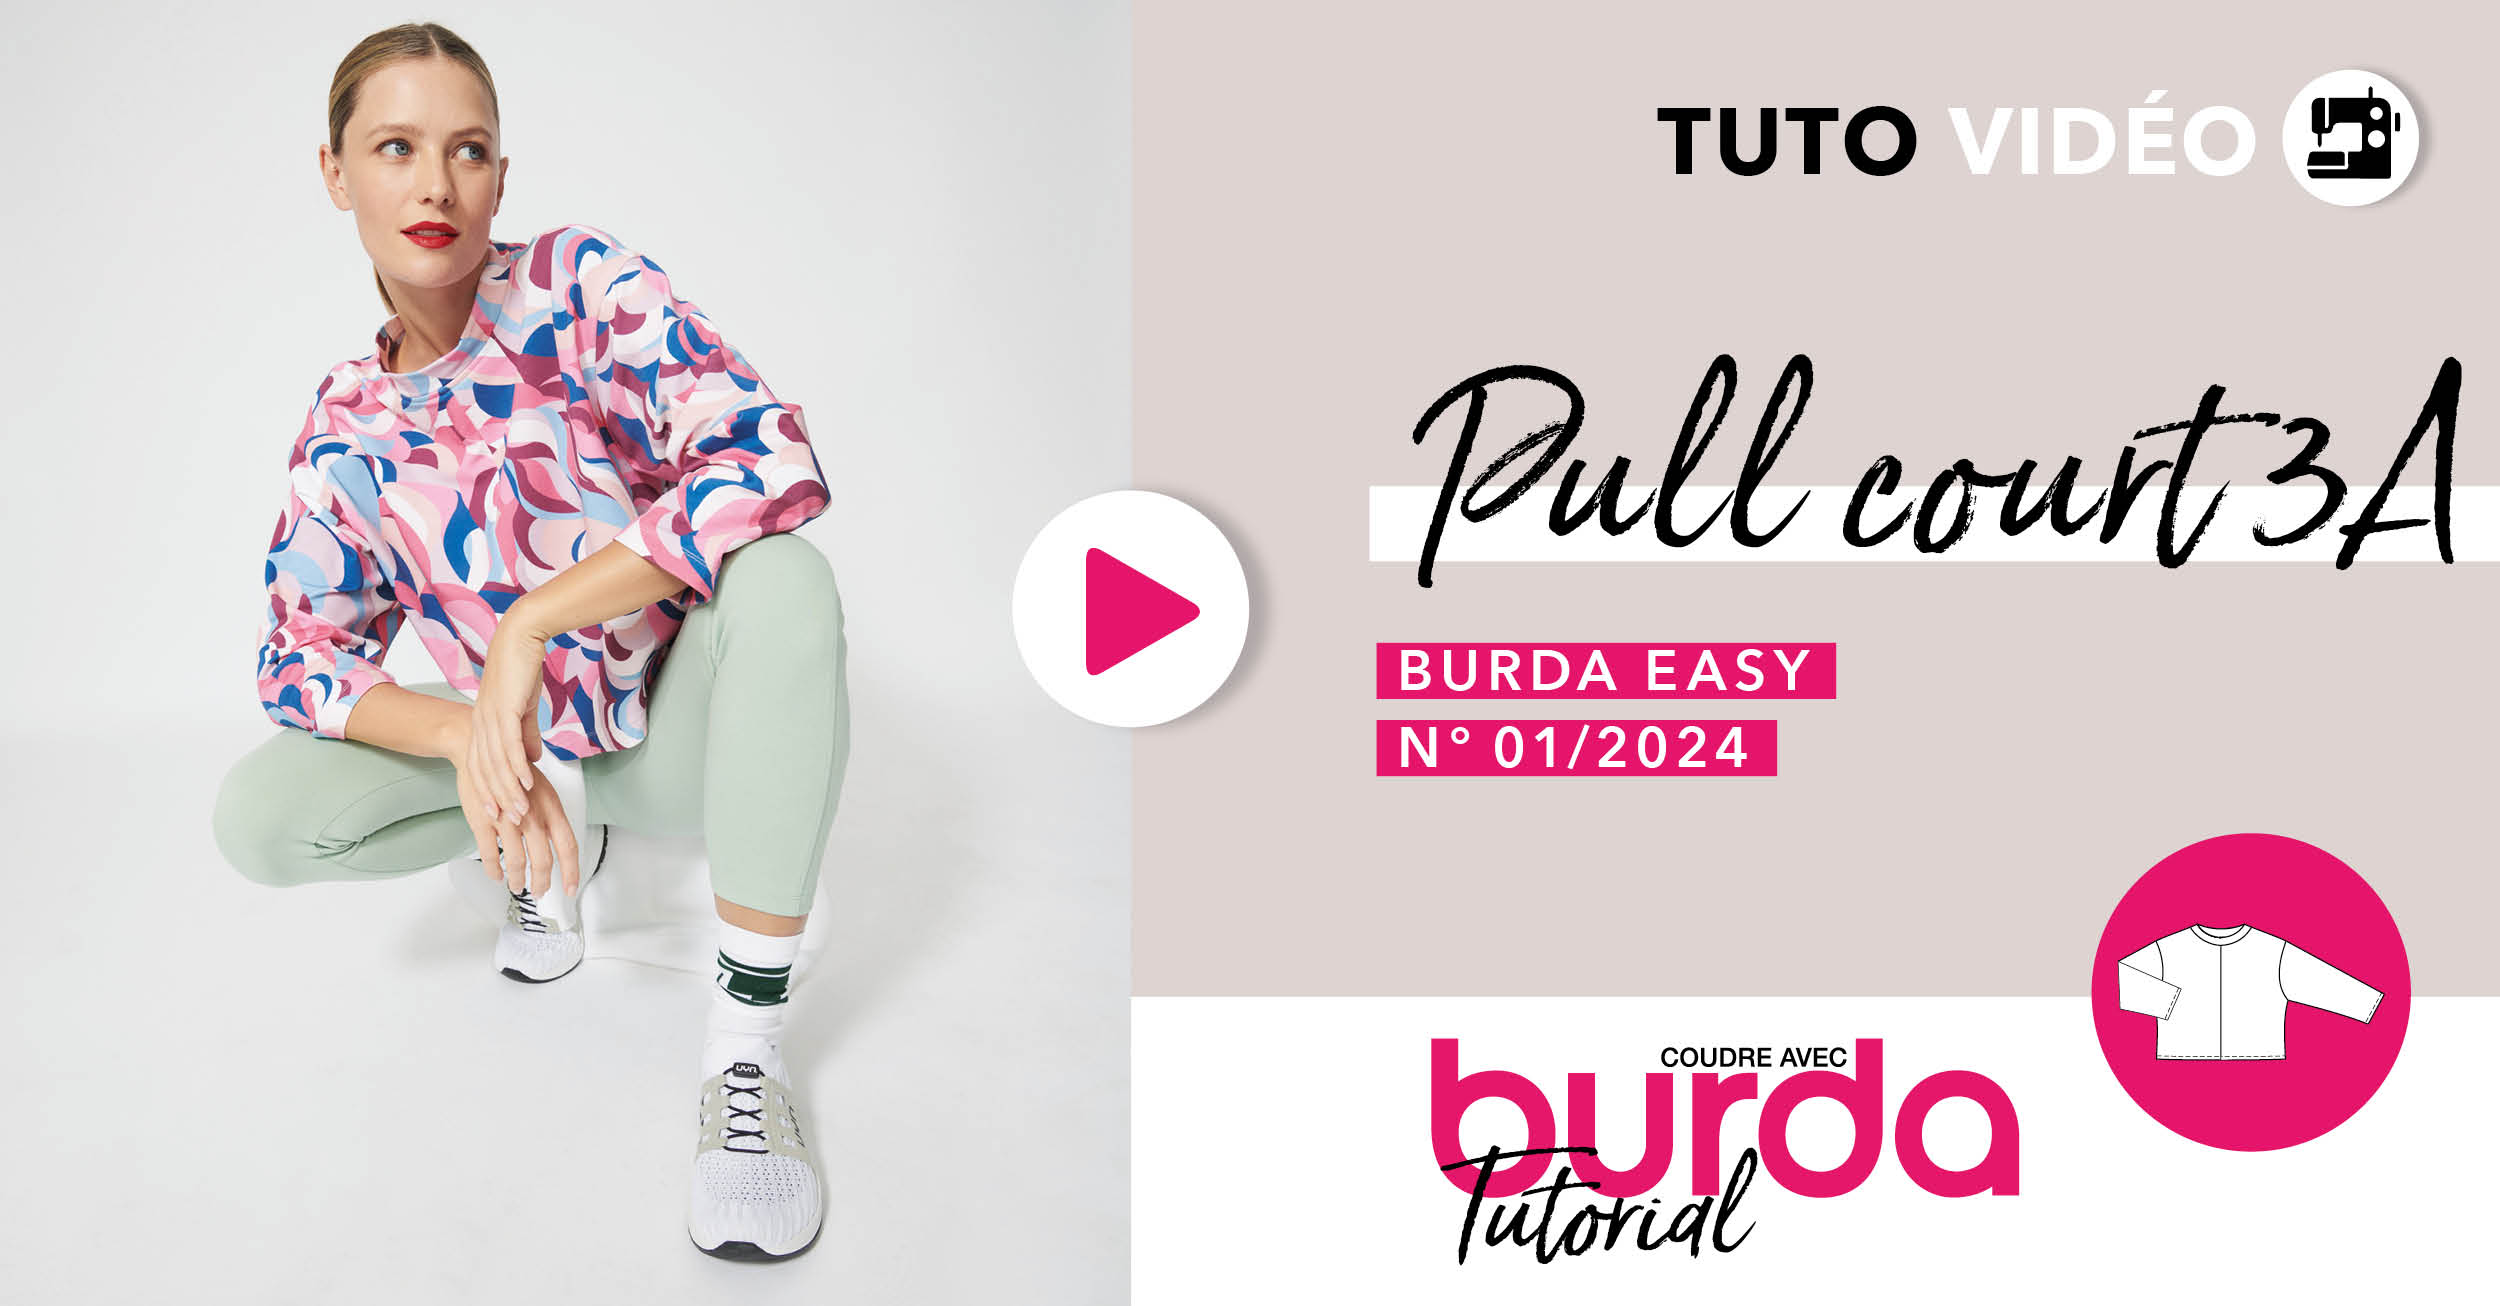 Tuto vidéo : Pull court 3A - burda easy n°1 janvier/février 2024